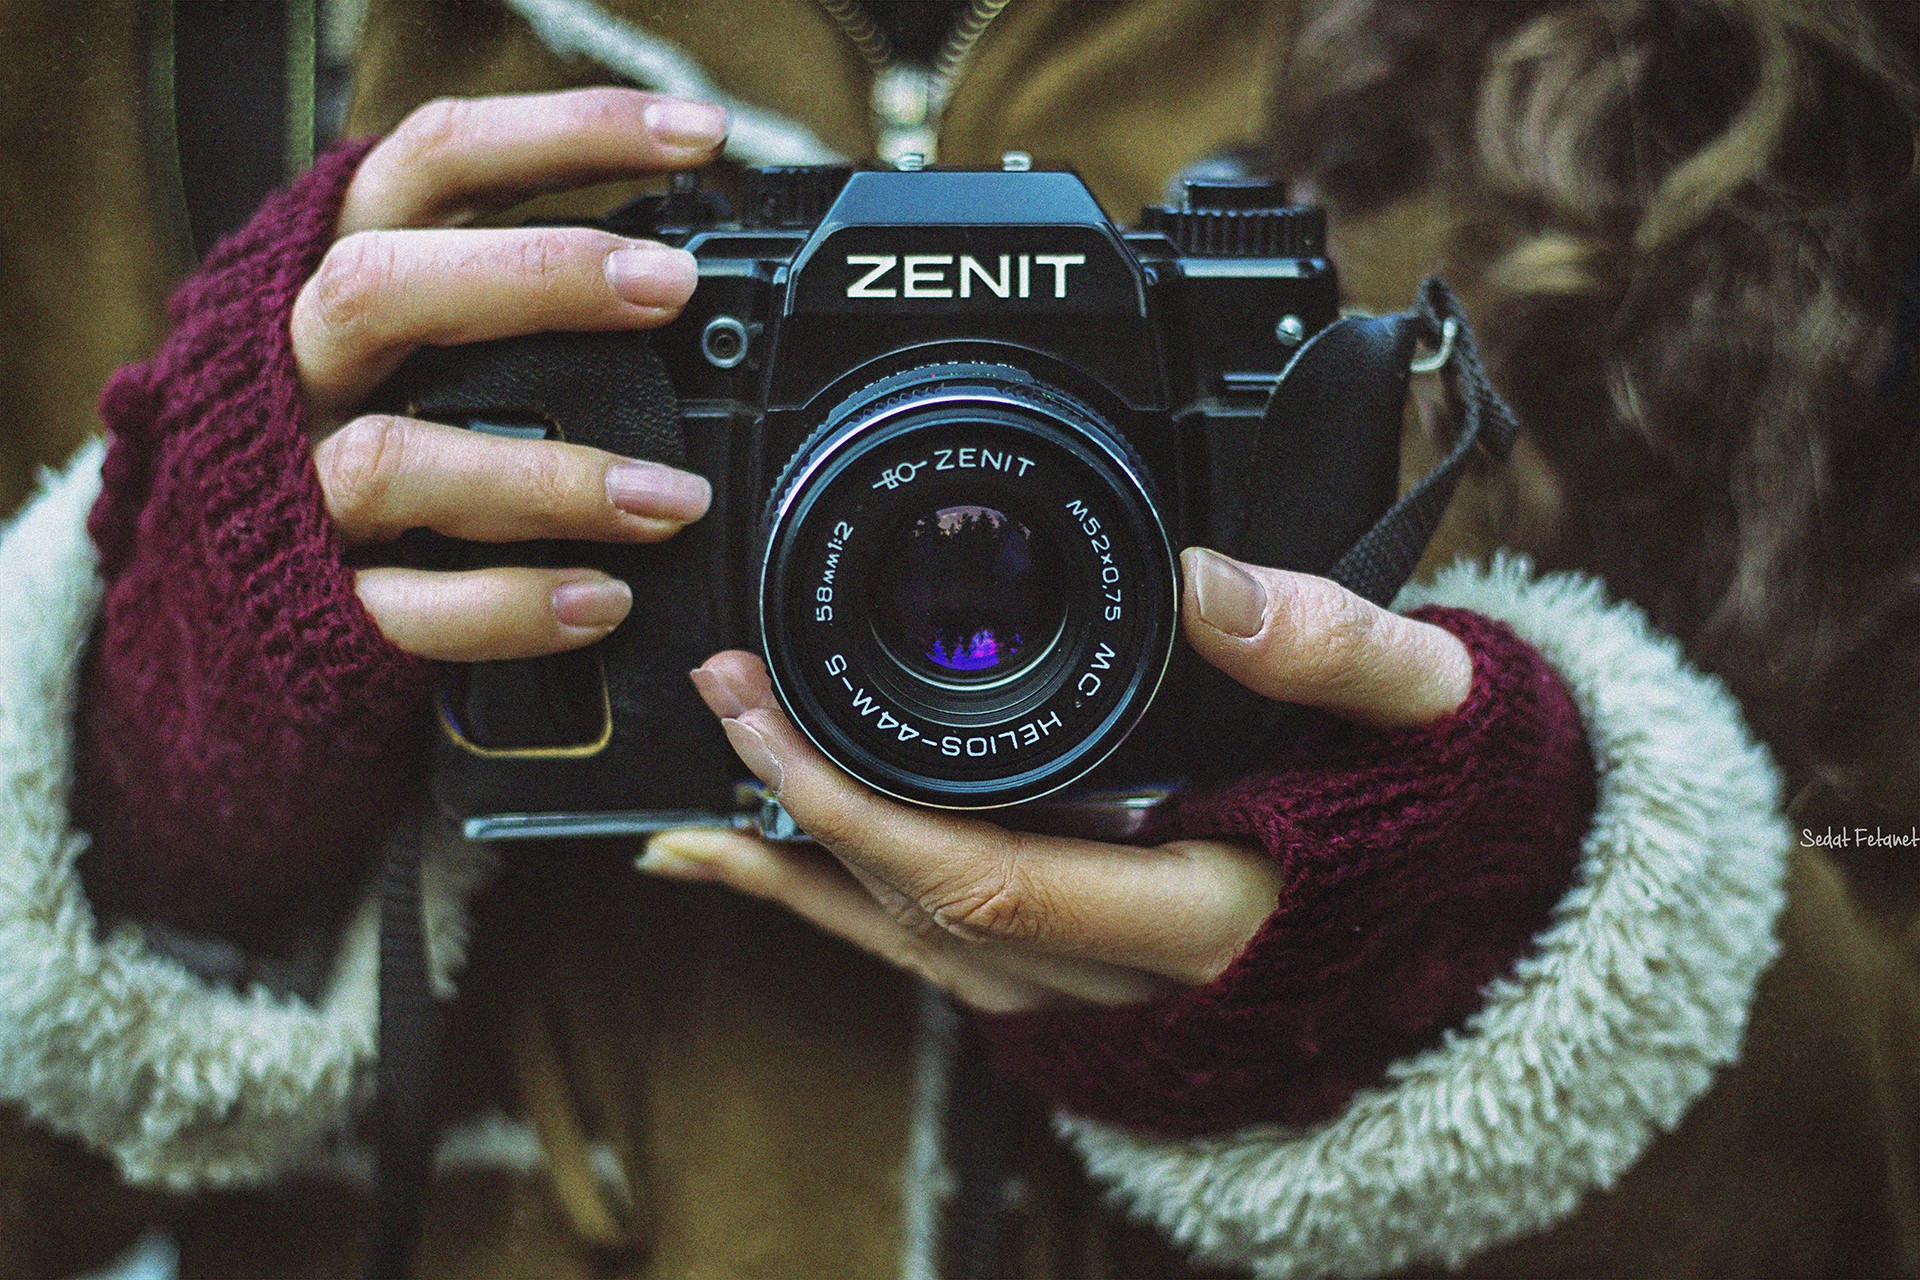 People 1920x1280 Zenit (camera) camera model photographer technology hands fingers women watermarked closeup